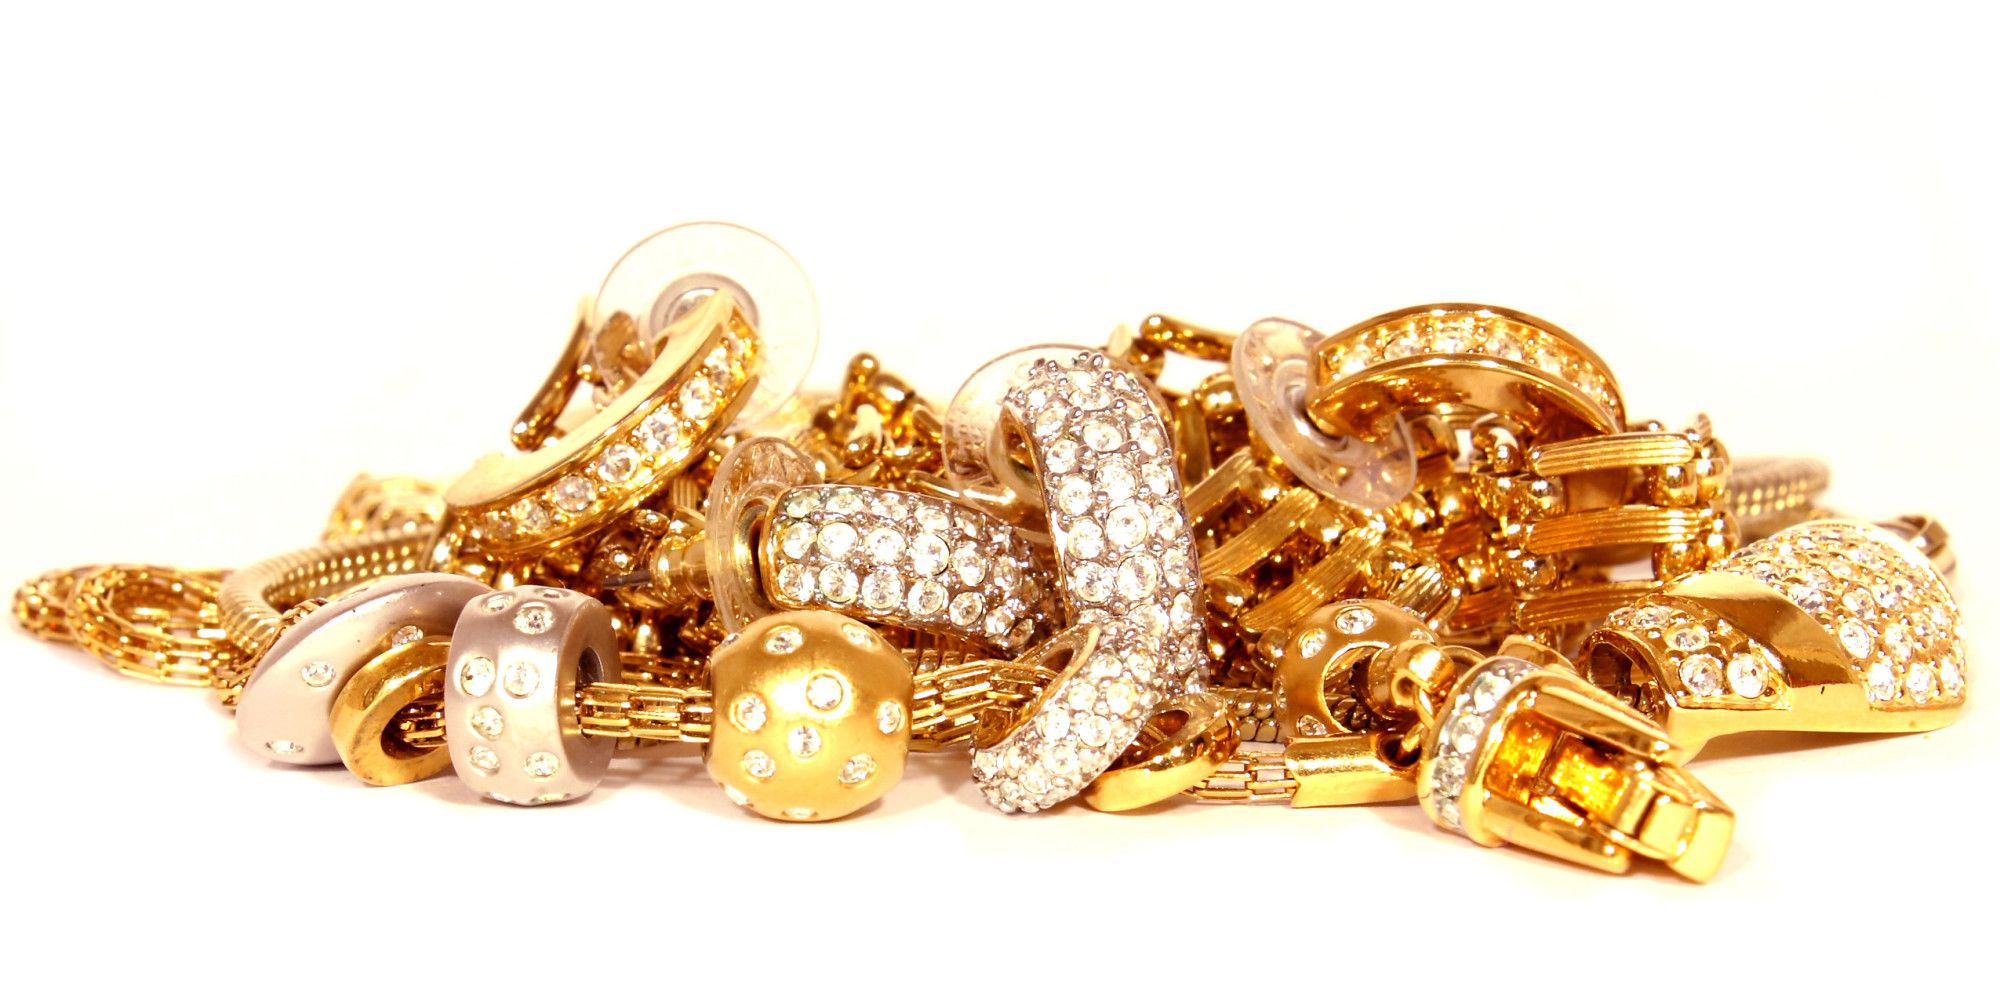 gold jewellery background